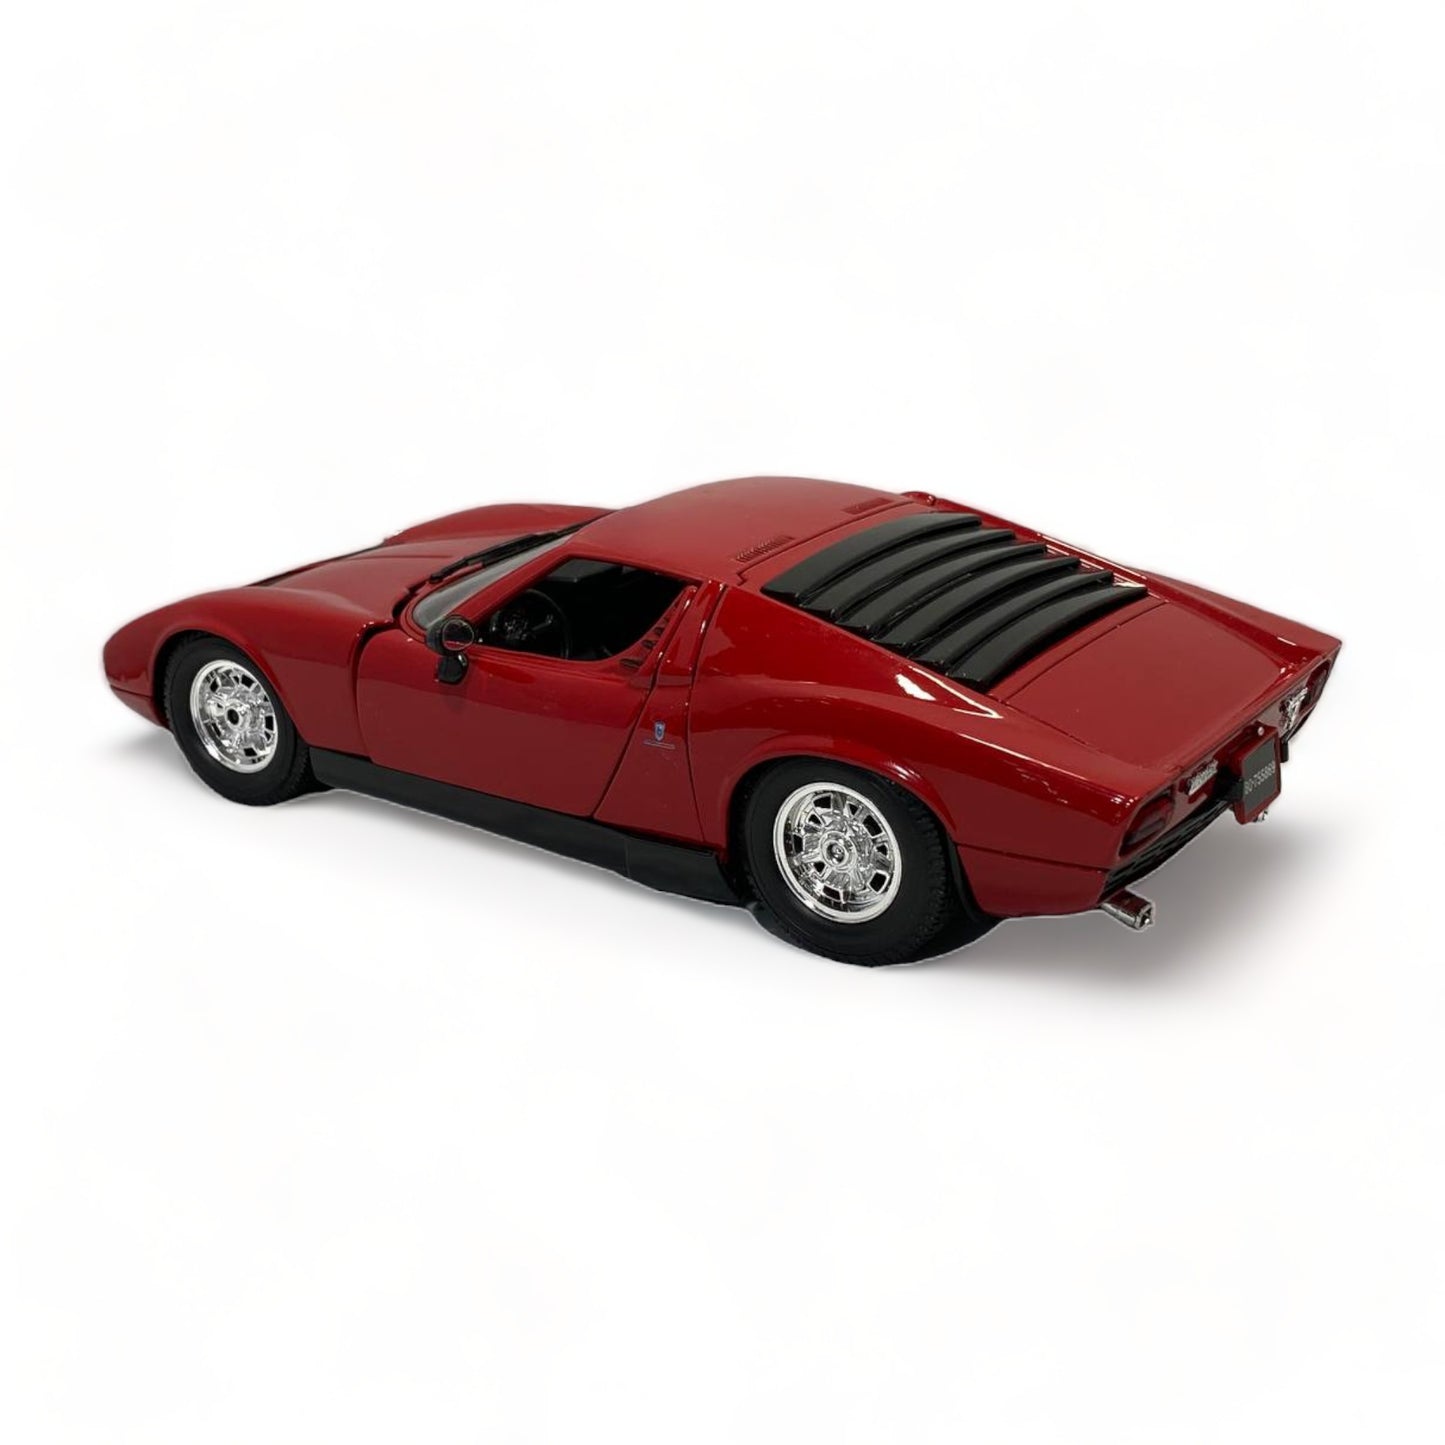 1/18 Diecast Lamborghini MIURA RED 1968 1/18 by Bburago Scale Model Car